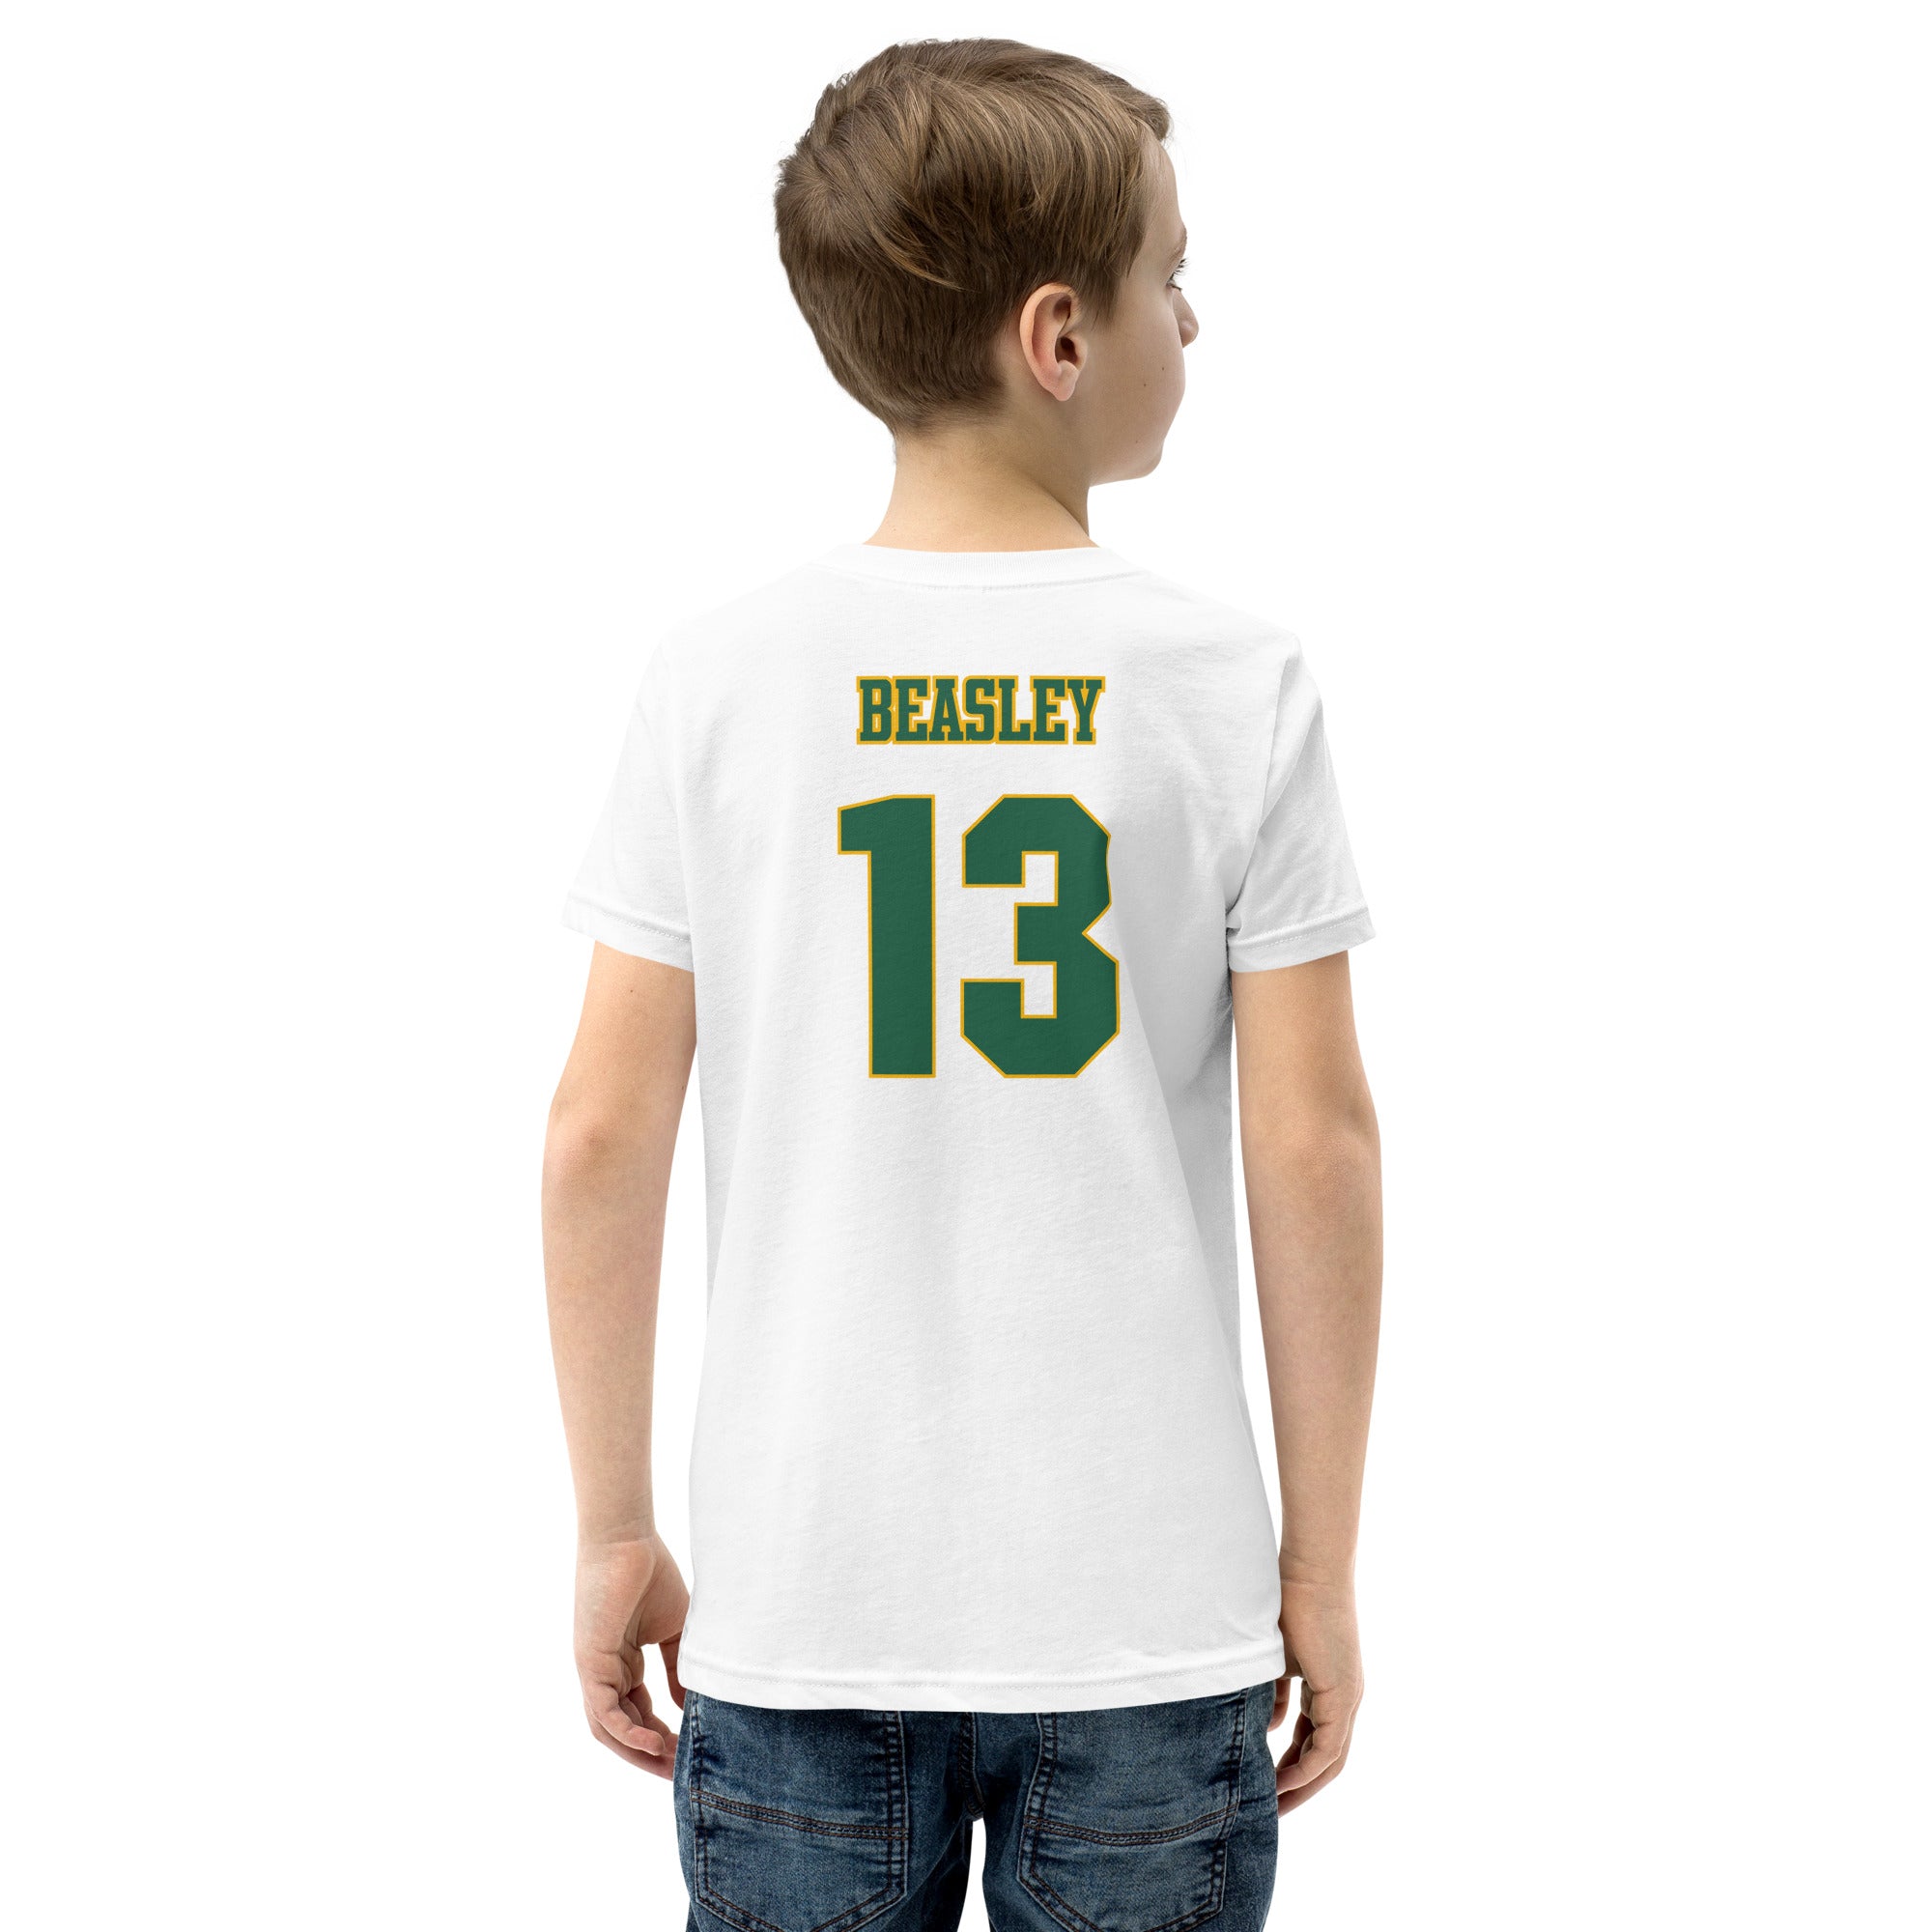 Robby Beasley #13 Youth Short Sleeve T-Shirt